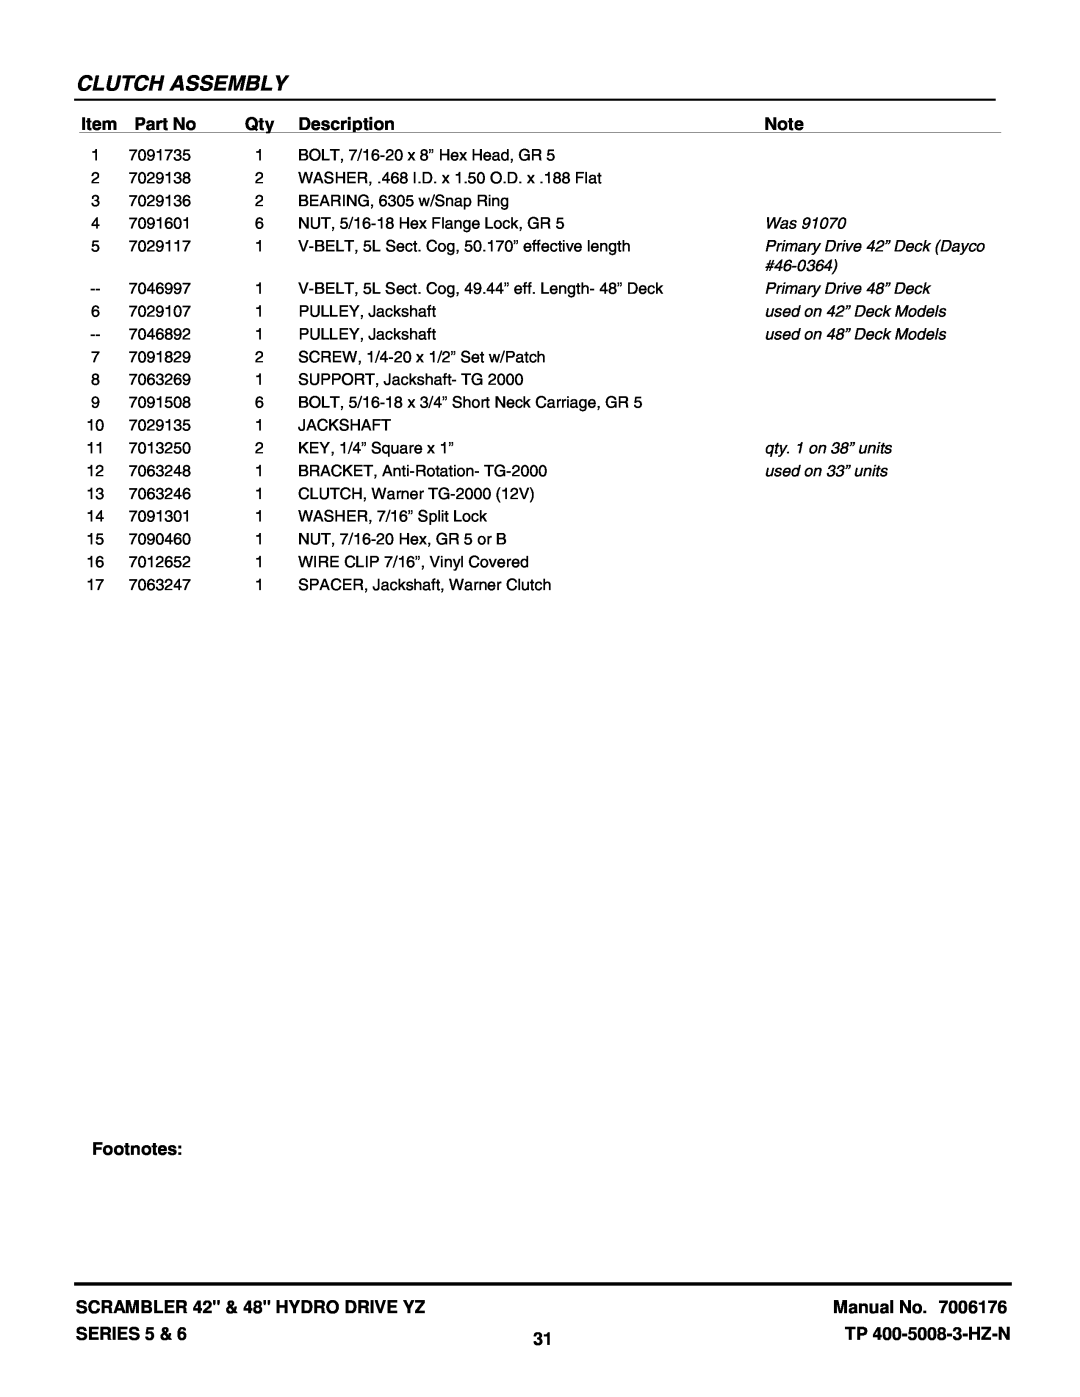 Snapper YZ20486BVE Clutch Assembly, Description, Footnotes, SCRAMBLER 42 & 48 HYDRO DRIVE YZ, Manual No, Series, #46-0364 